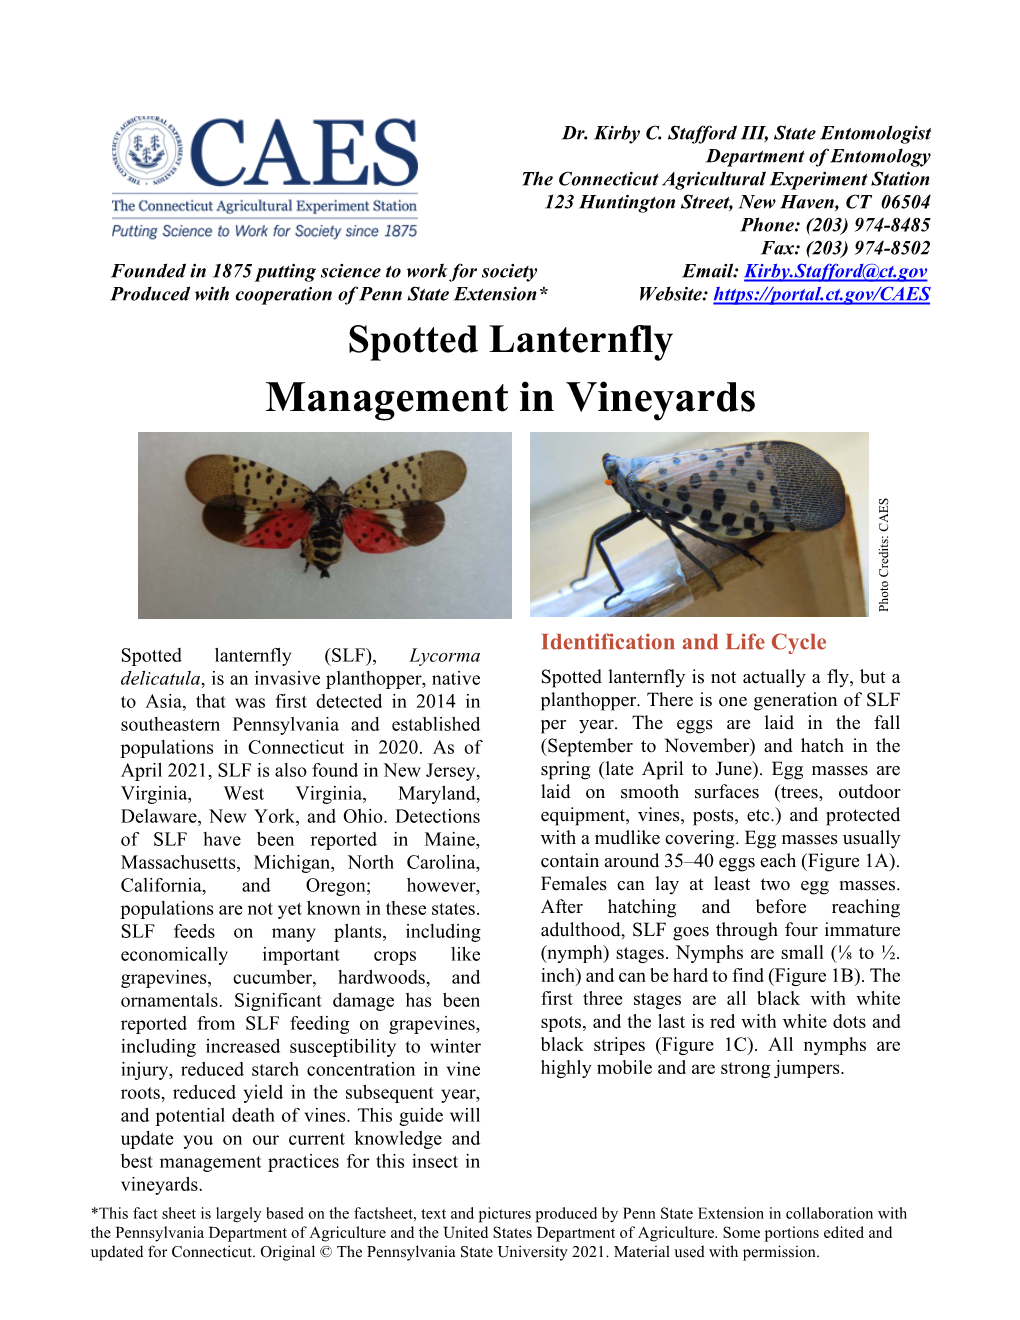 Spotted Lanternfly Management for Vineyards